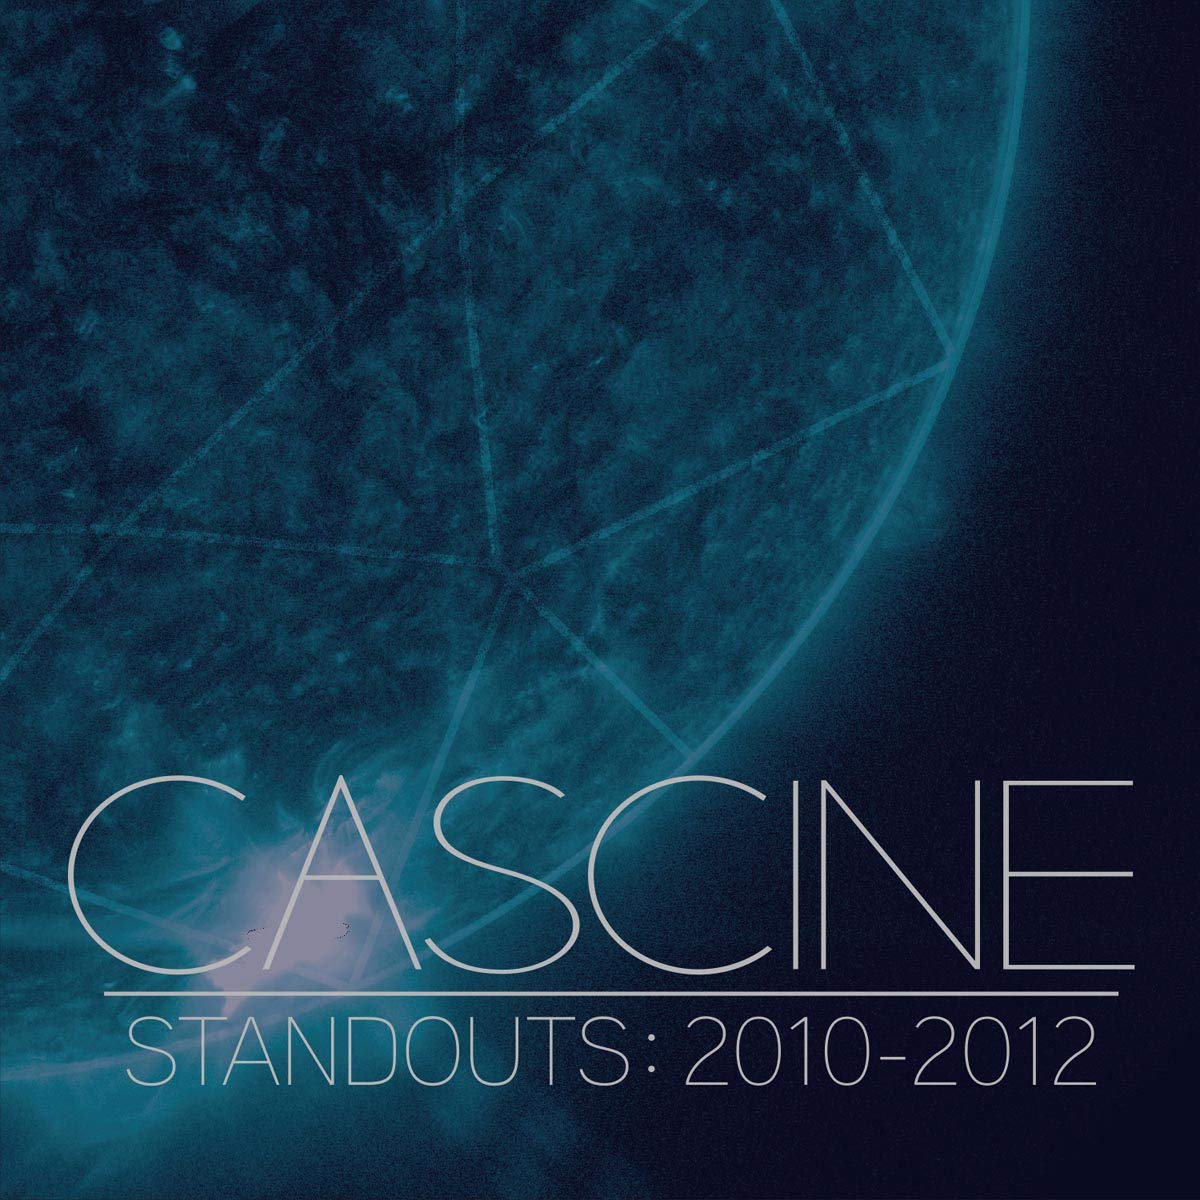 Various Artists - Cascine Standouts: 2010-2012 - CD